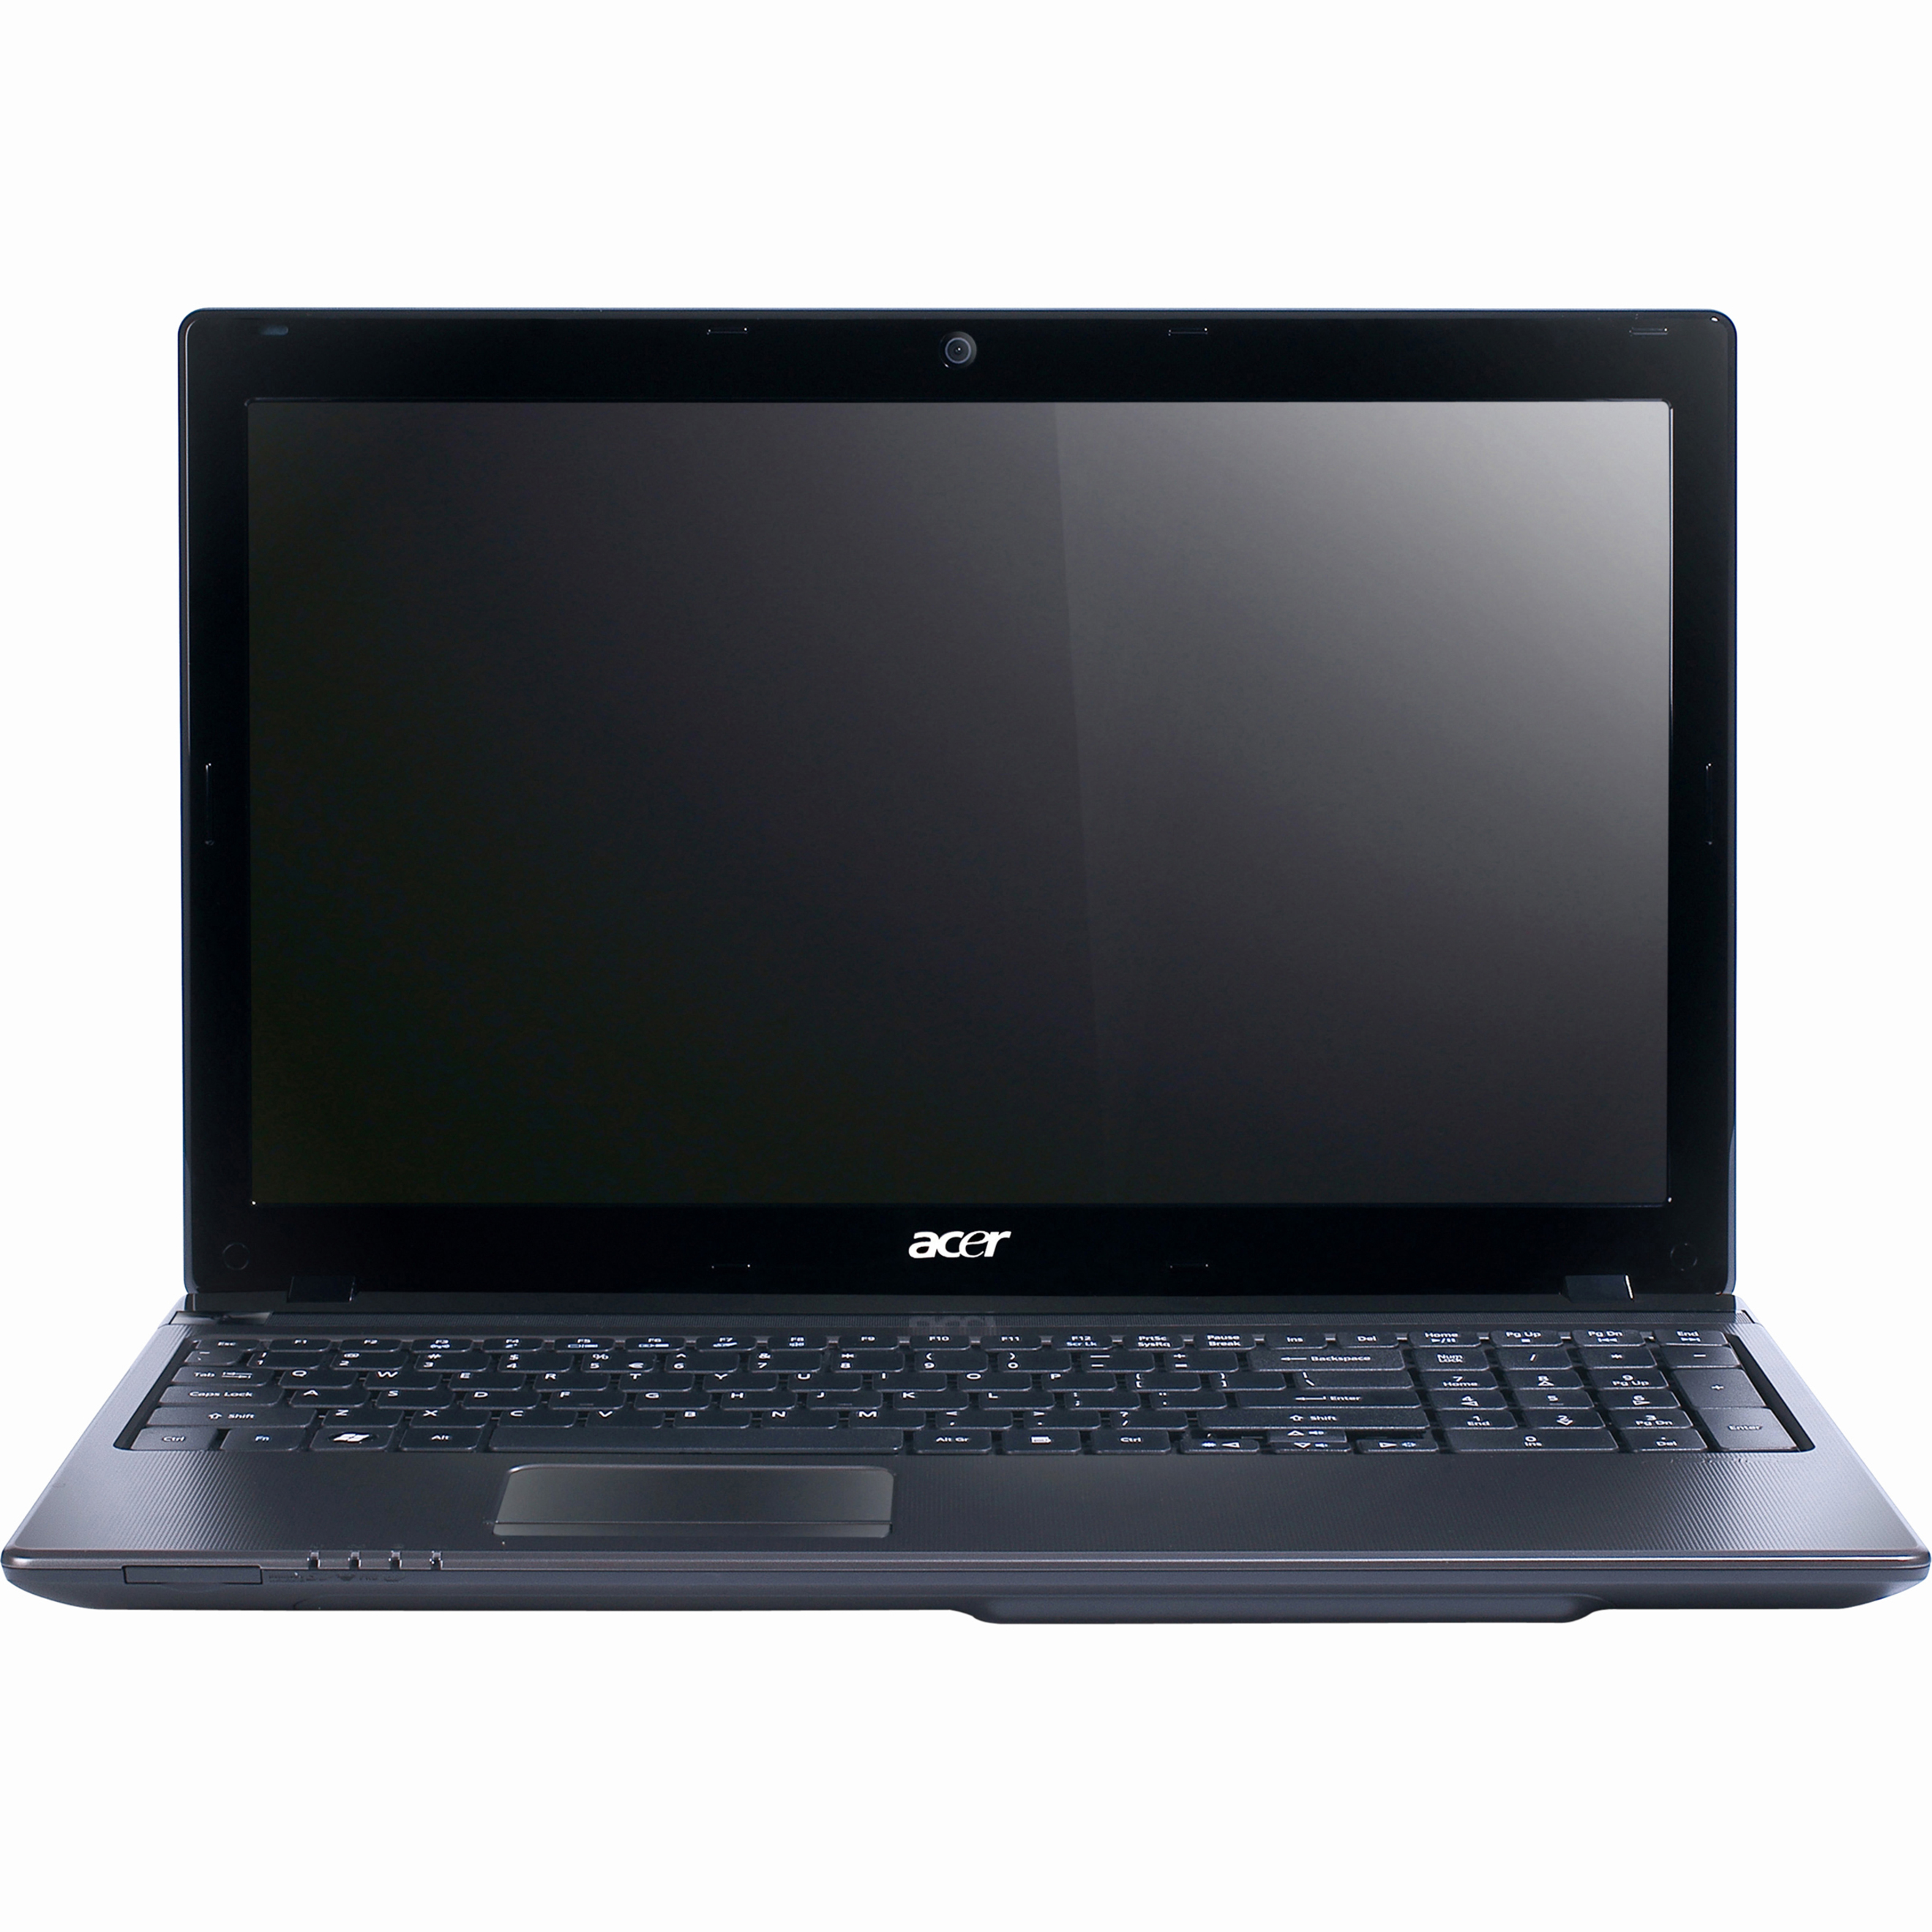 Acer Aspire 15.6" Laptop, Intel Core i5 i5-2430M, 500GB HD, DVD Writer, Windows 7 Home Premium, AS5750-2434G50Mnkk - image 1 of 6